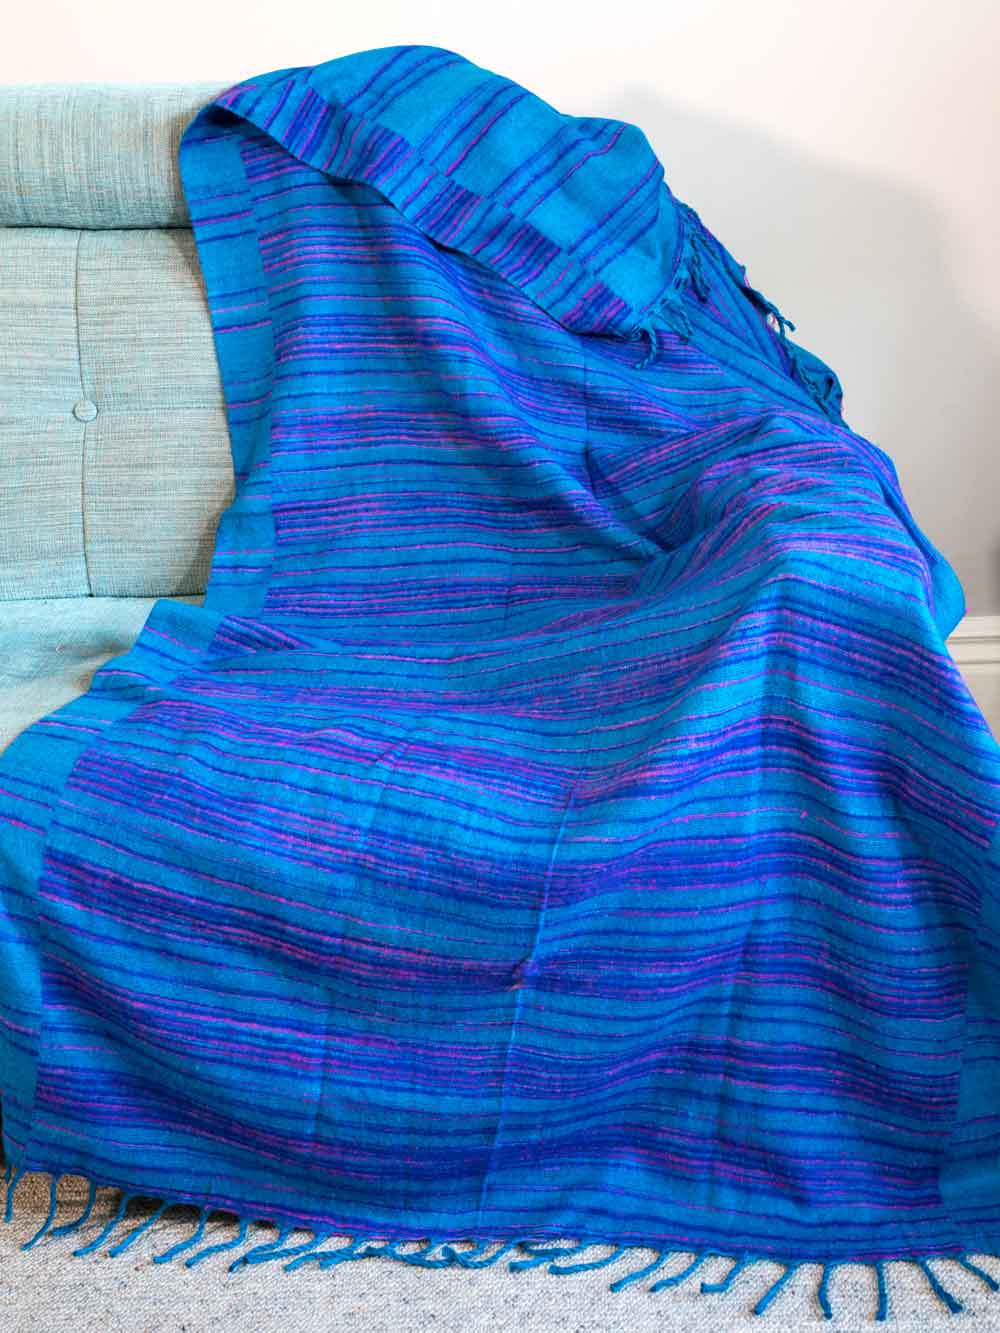 Tibetan Blankets in Blue & Violet Colours